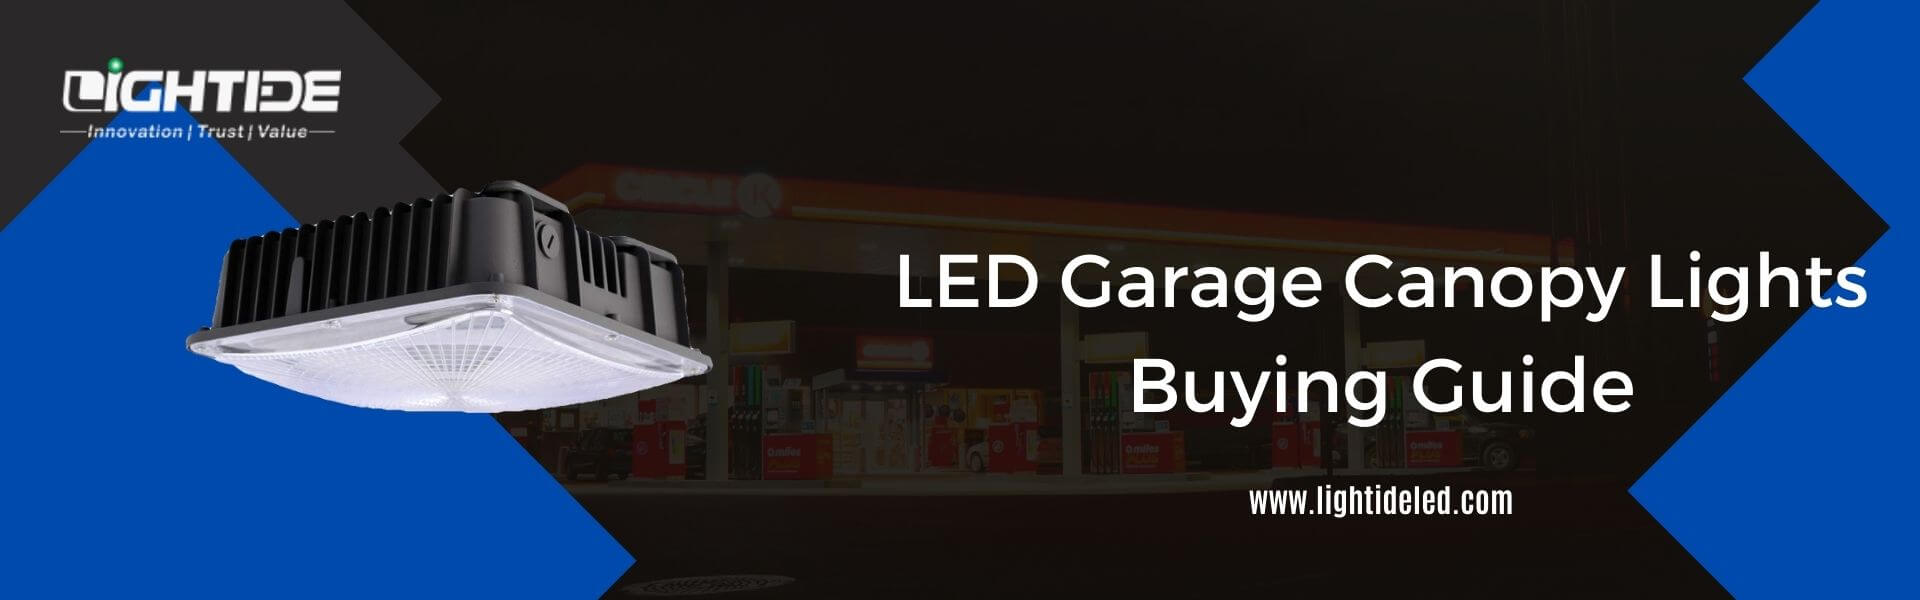 Lightide led garage canopy light buying guide